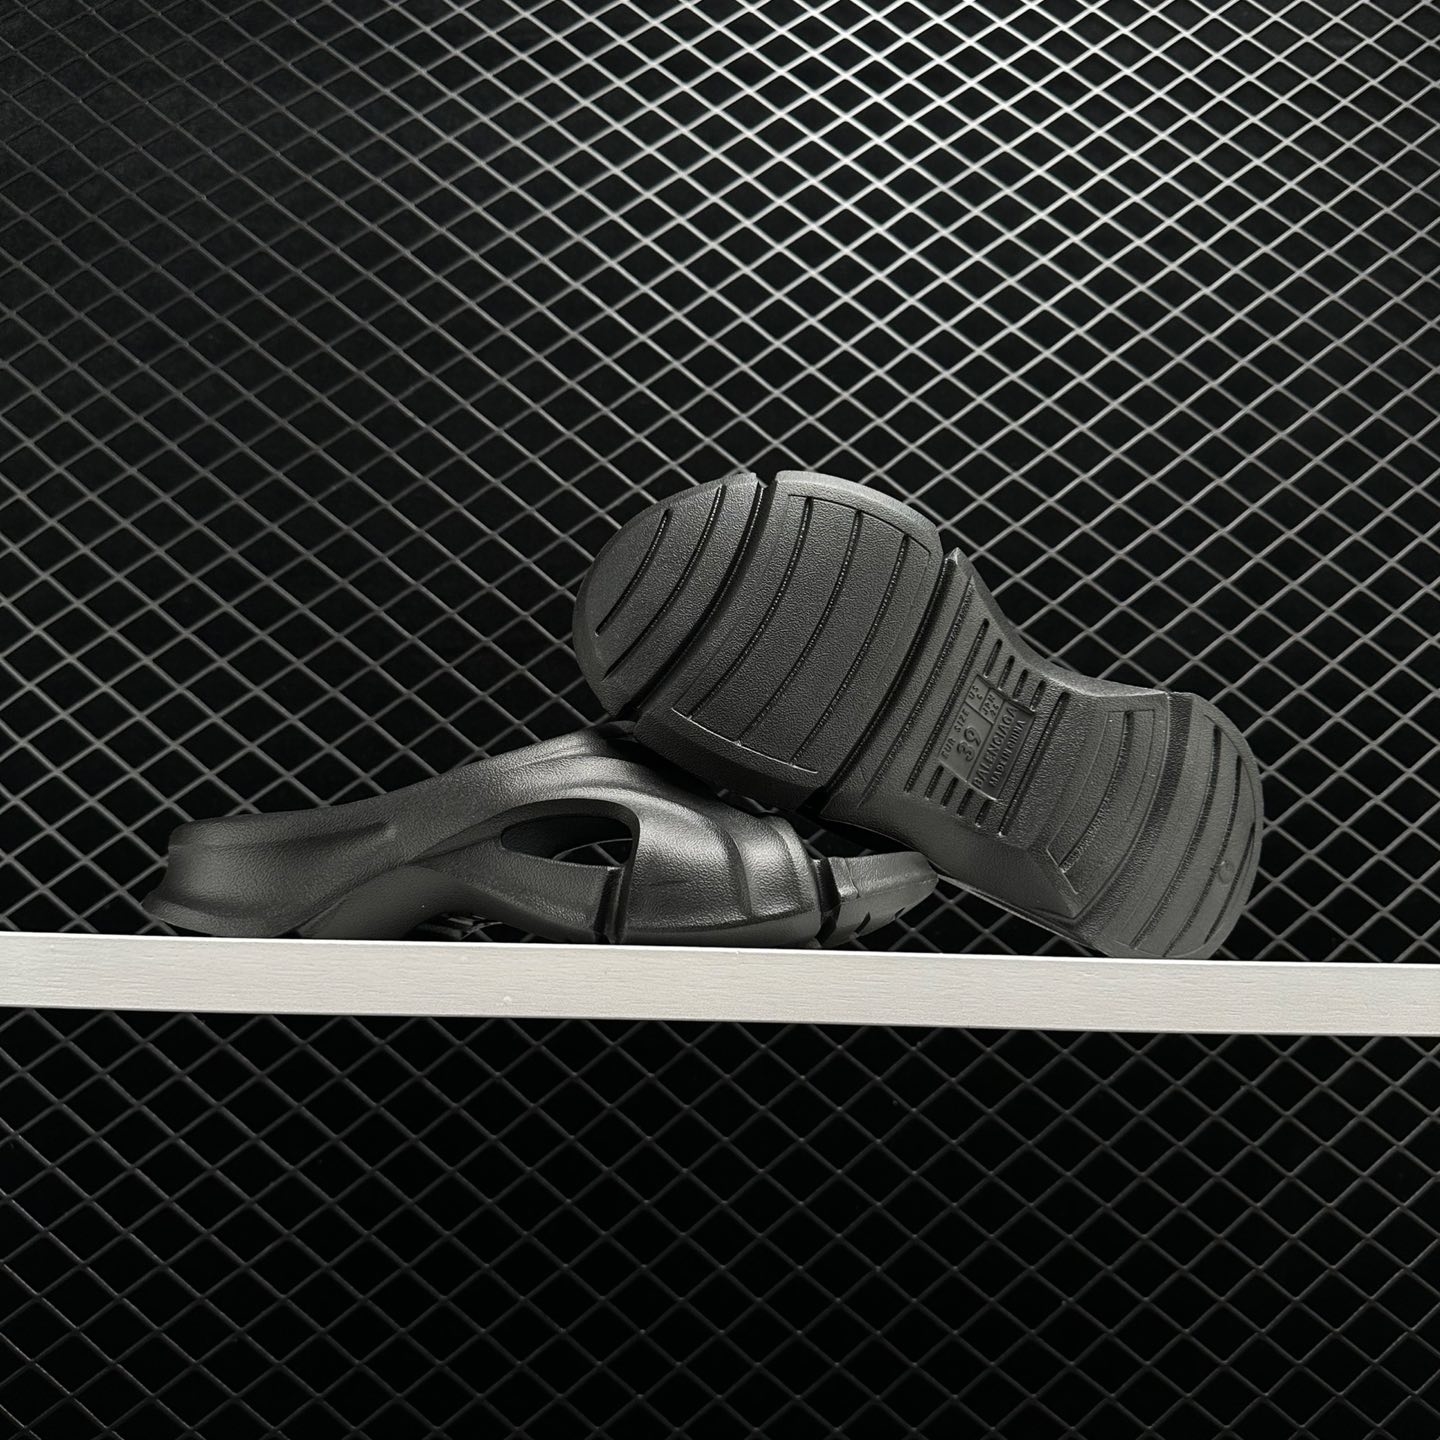 Balenciaga Mold Slide Sandal Black 653873W3CE29000 - Stylish and Comfortable Women's Sandals